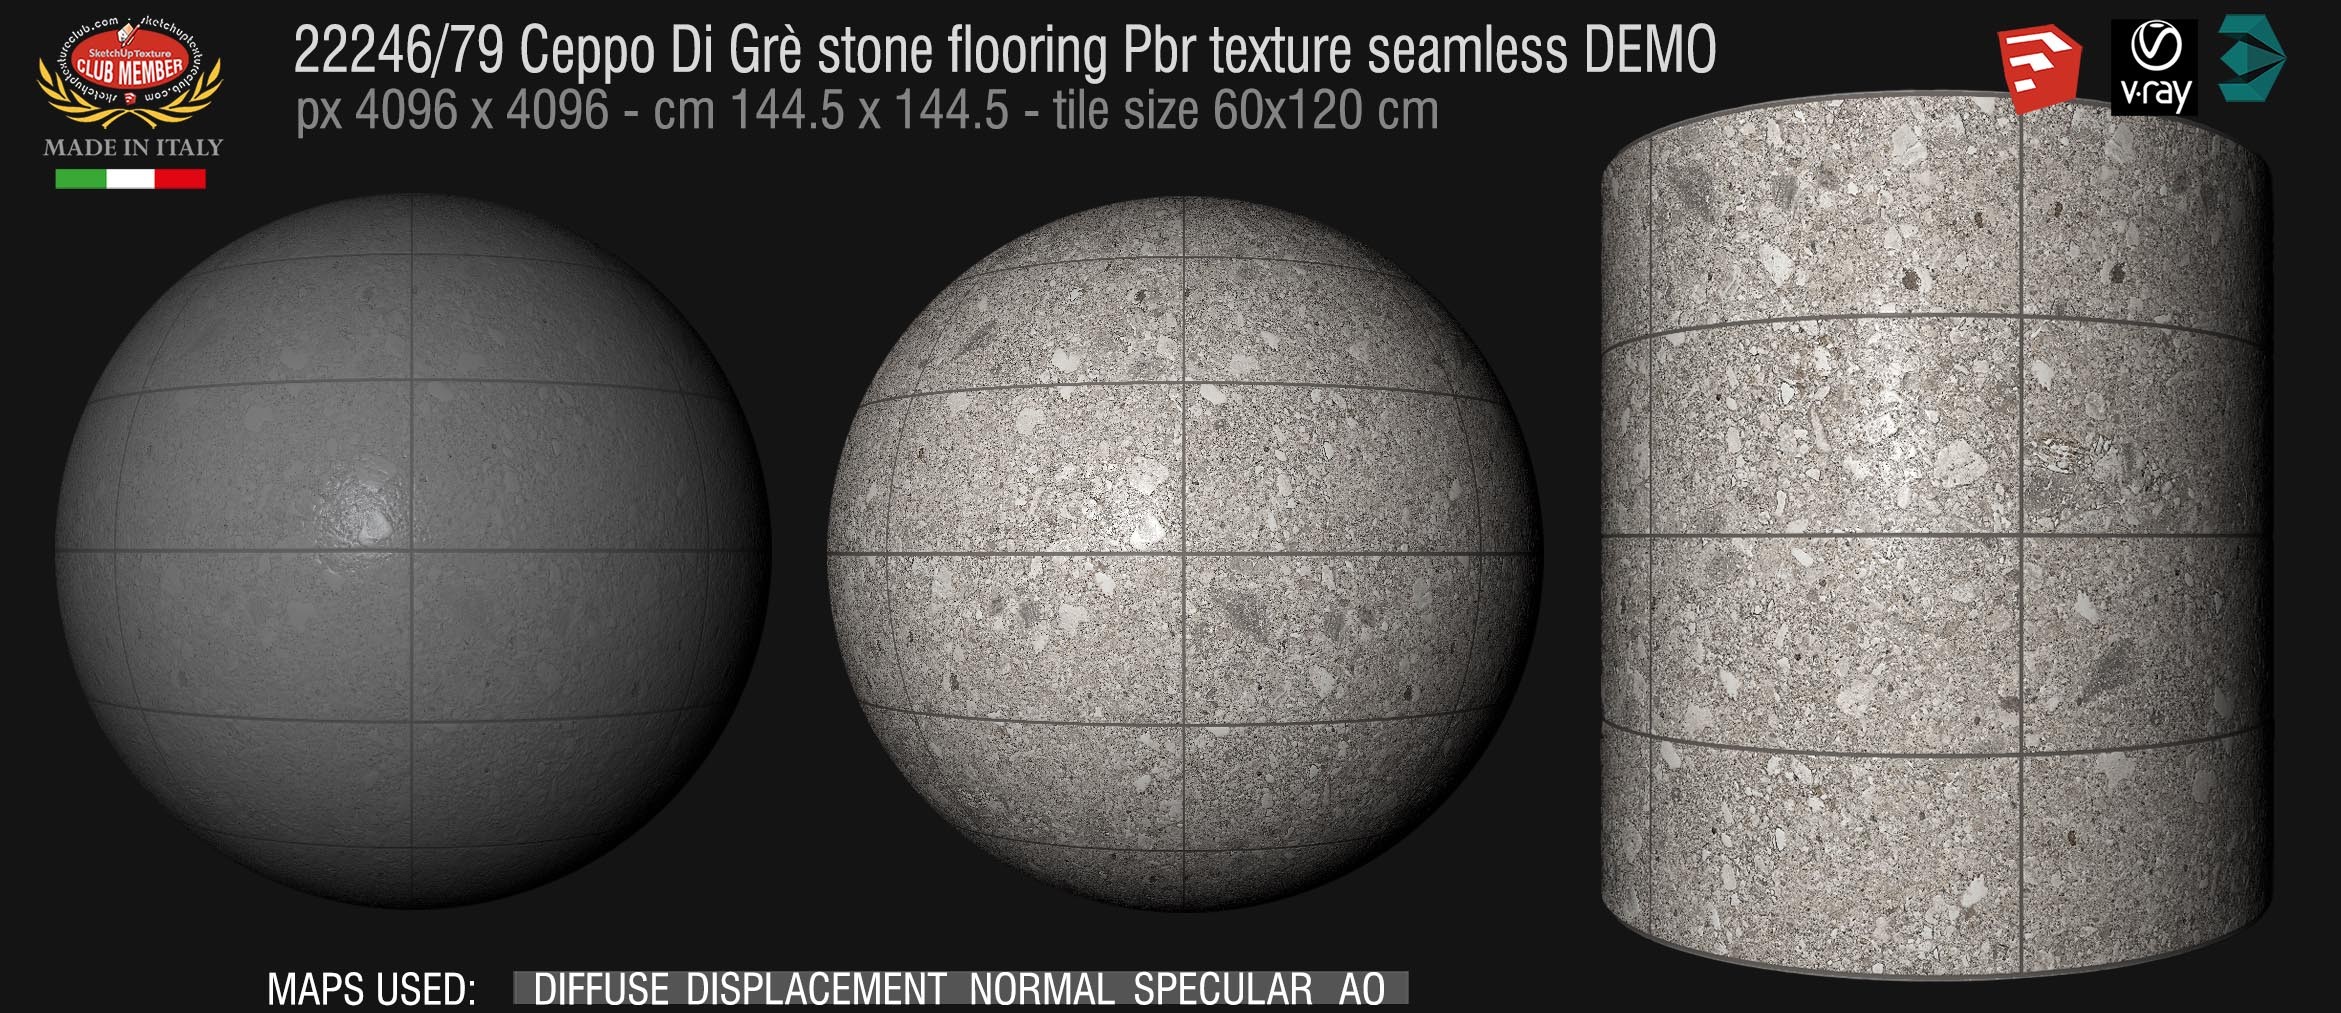 22246_79 Ceppo Di Grè stone flooring Pbr texture seamless DEMO - INTERIOR / OUTDOOR Paving - tile size 60x120 cm